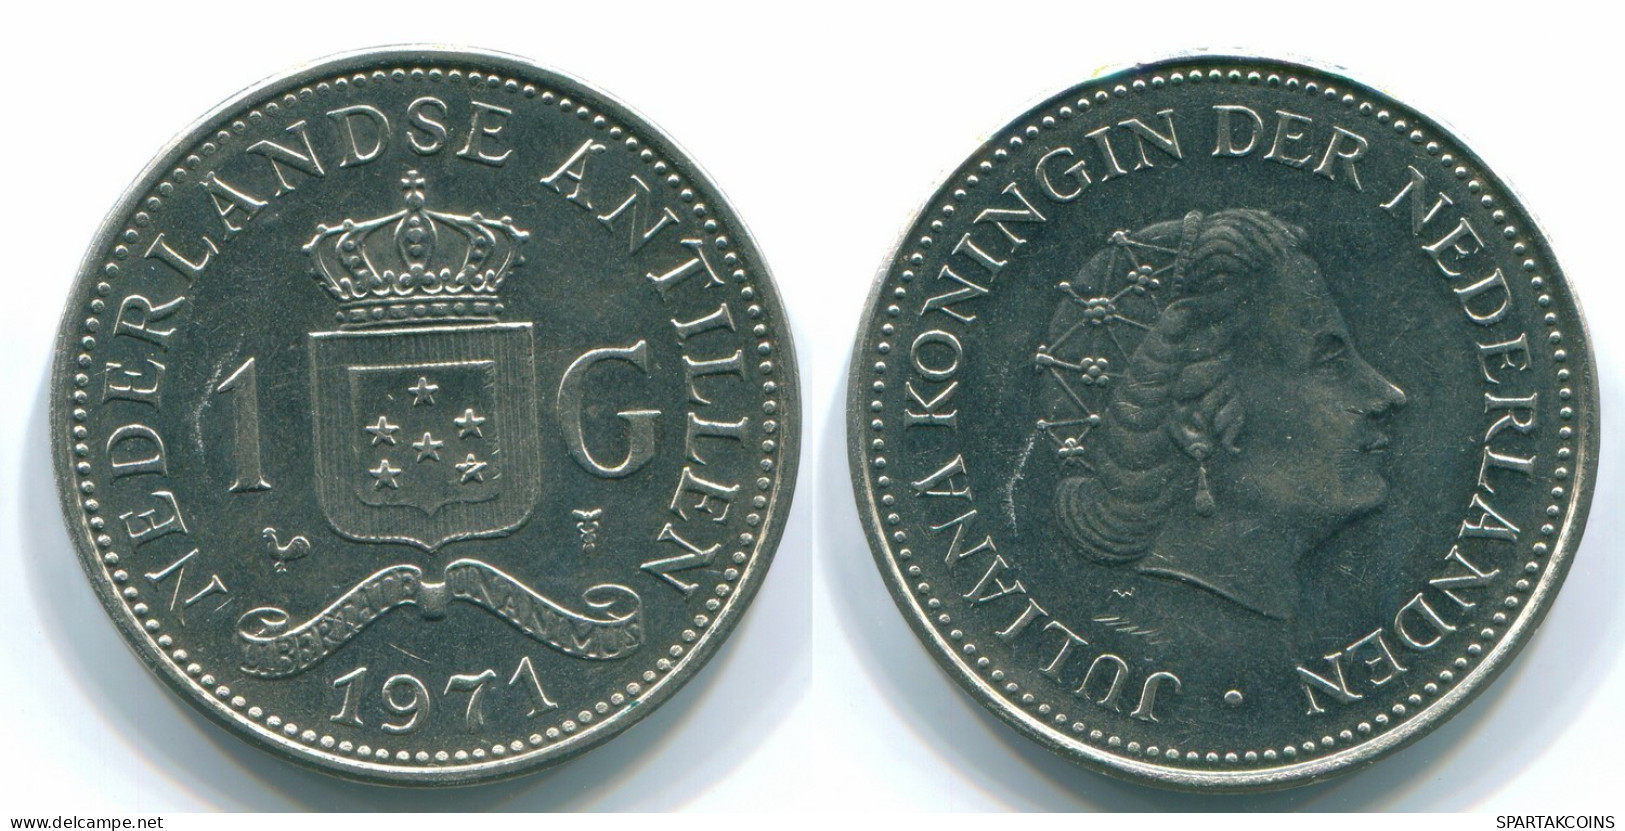 1 GULDEN 1971 NETHERLANDS ANTILLES Nickel Colonial Coin #S11951.U.A - Antilles Néerlandaises